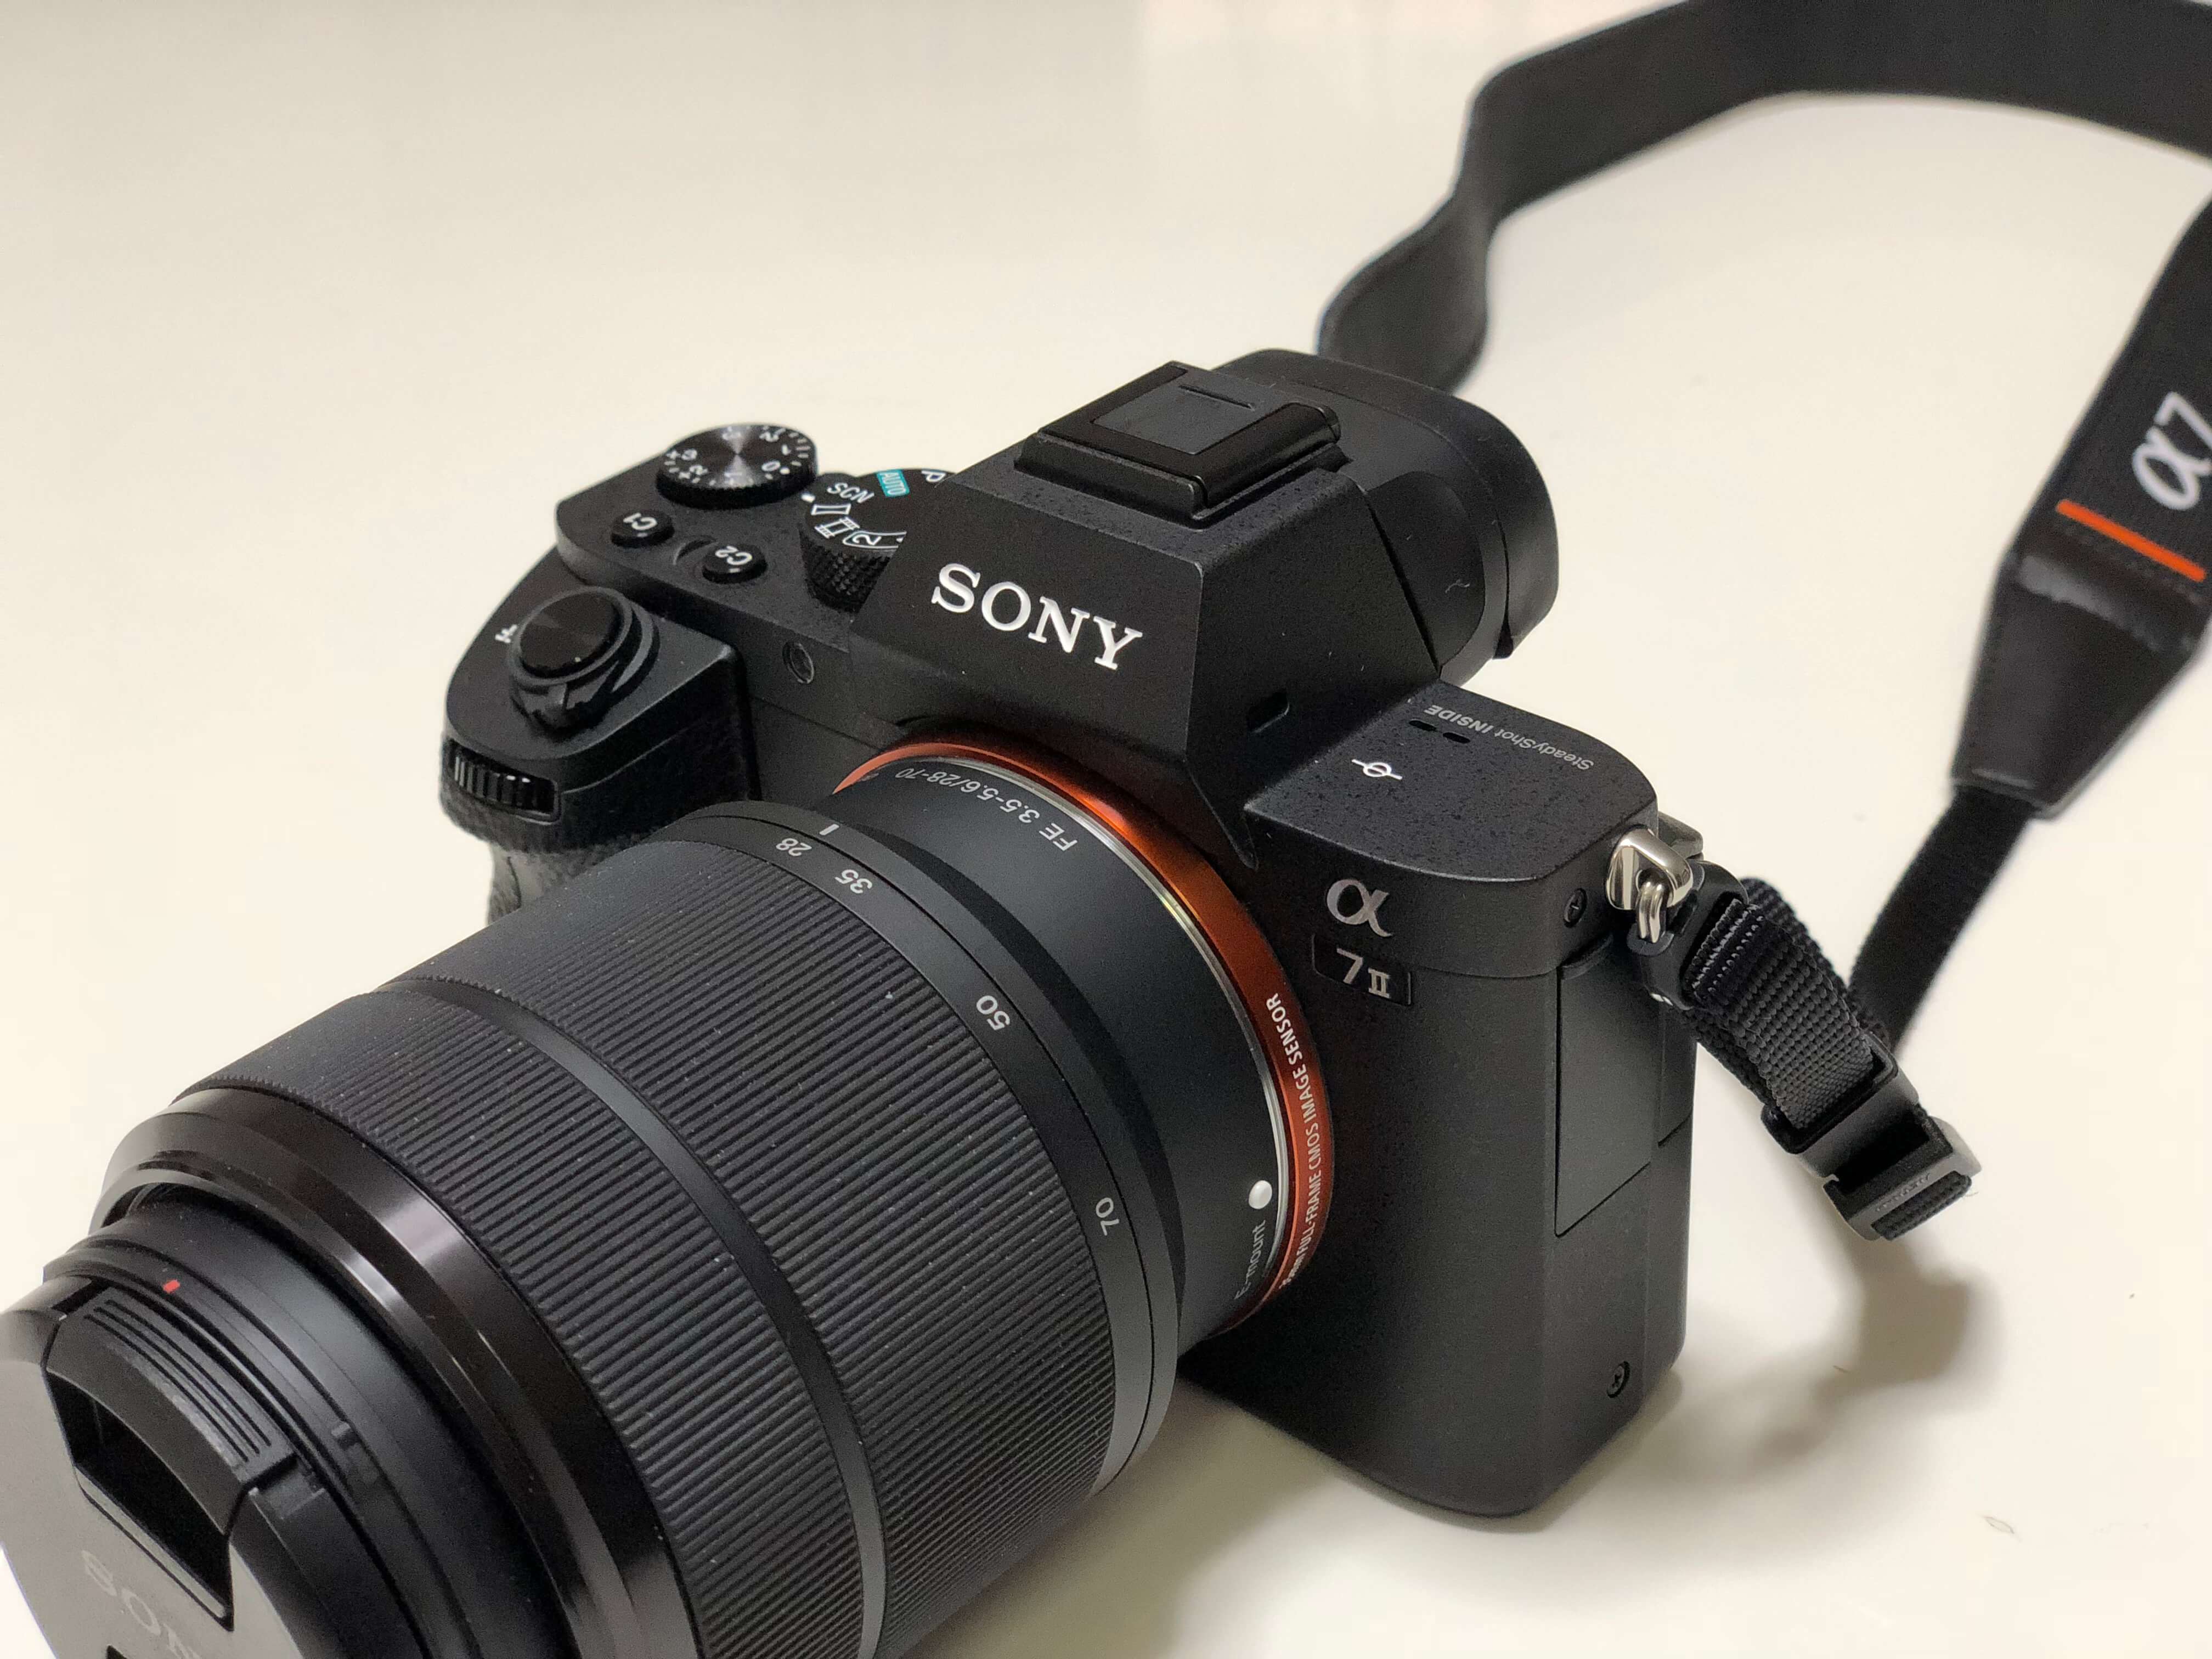 SONYのミラーレス一眼カメラ「α7 II」を買いました